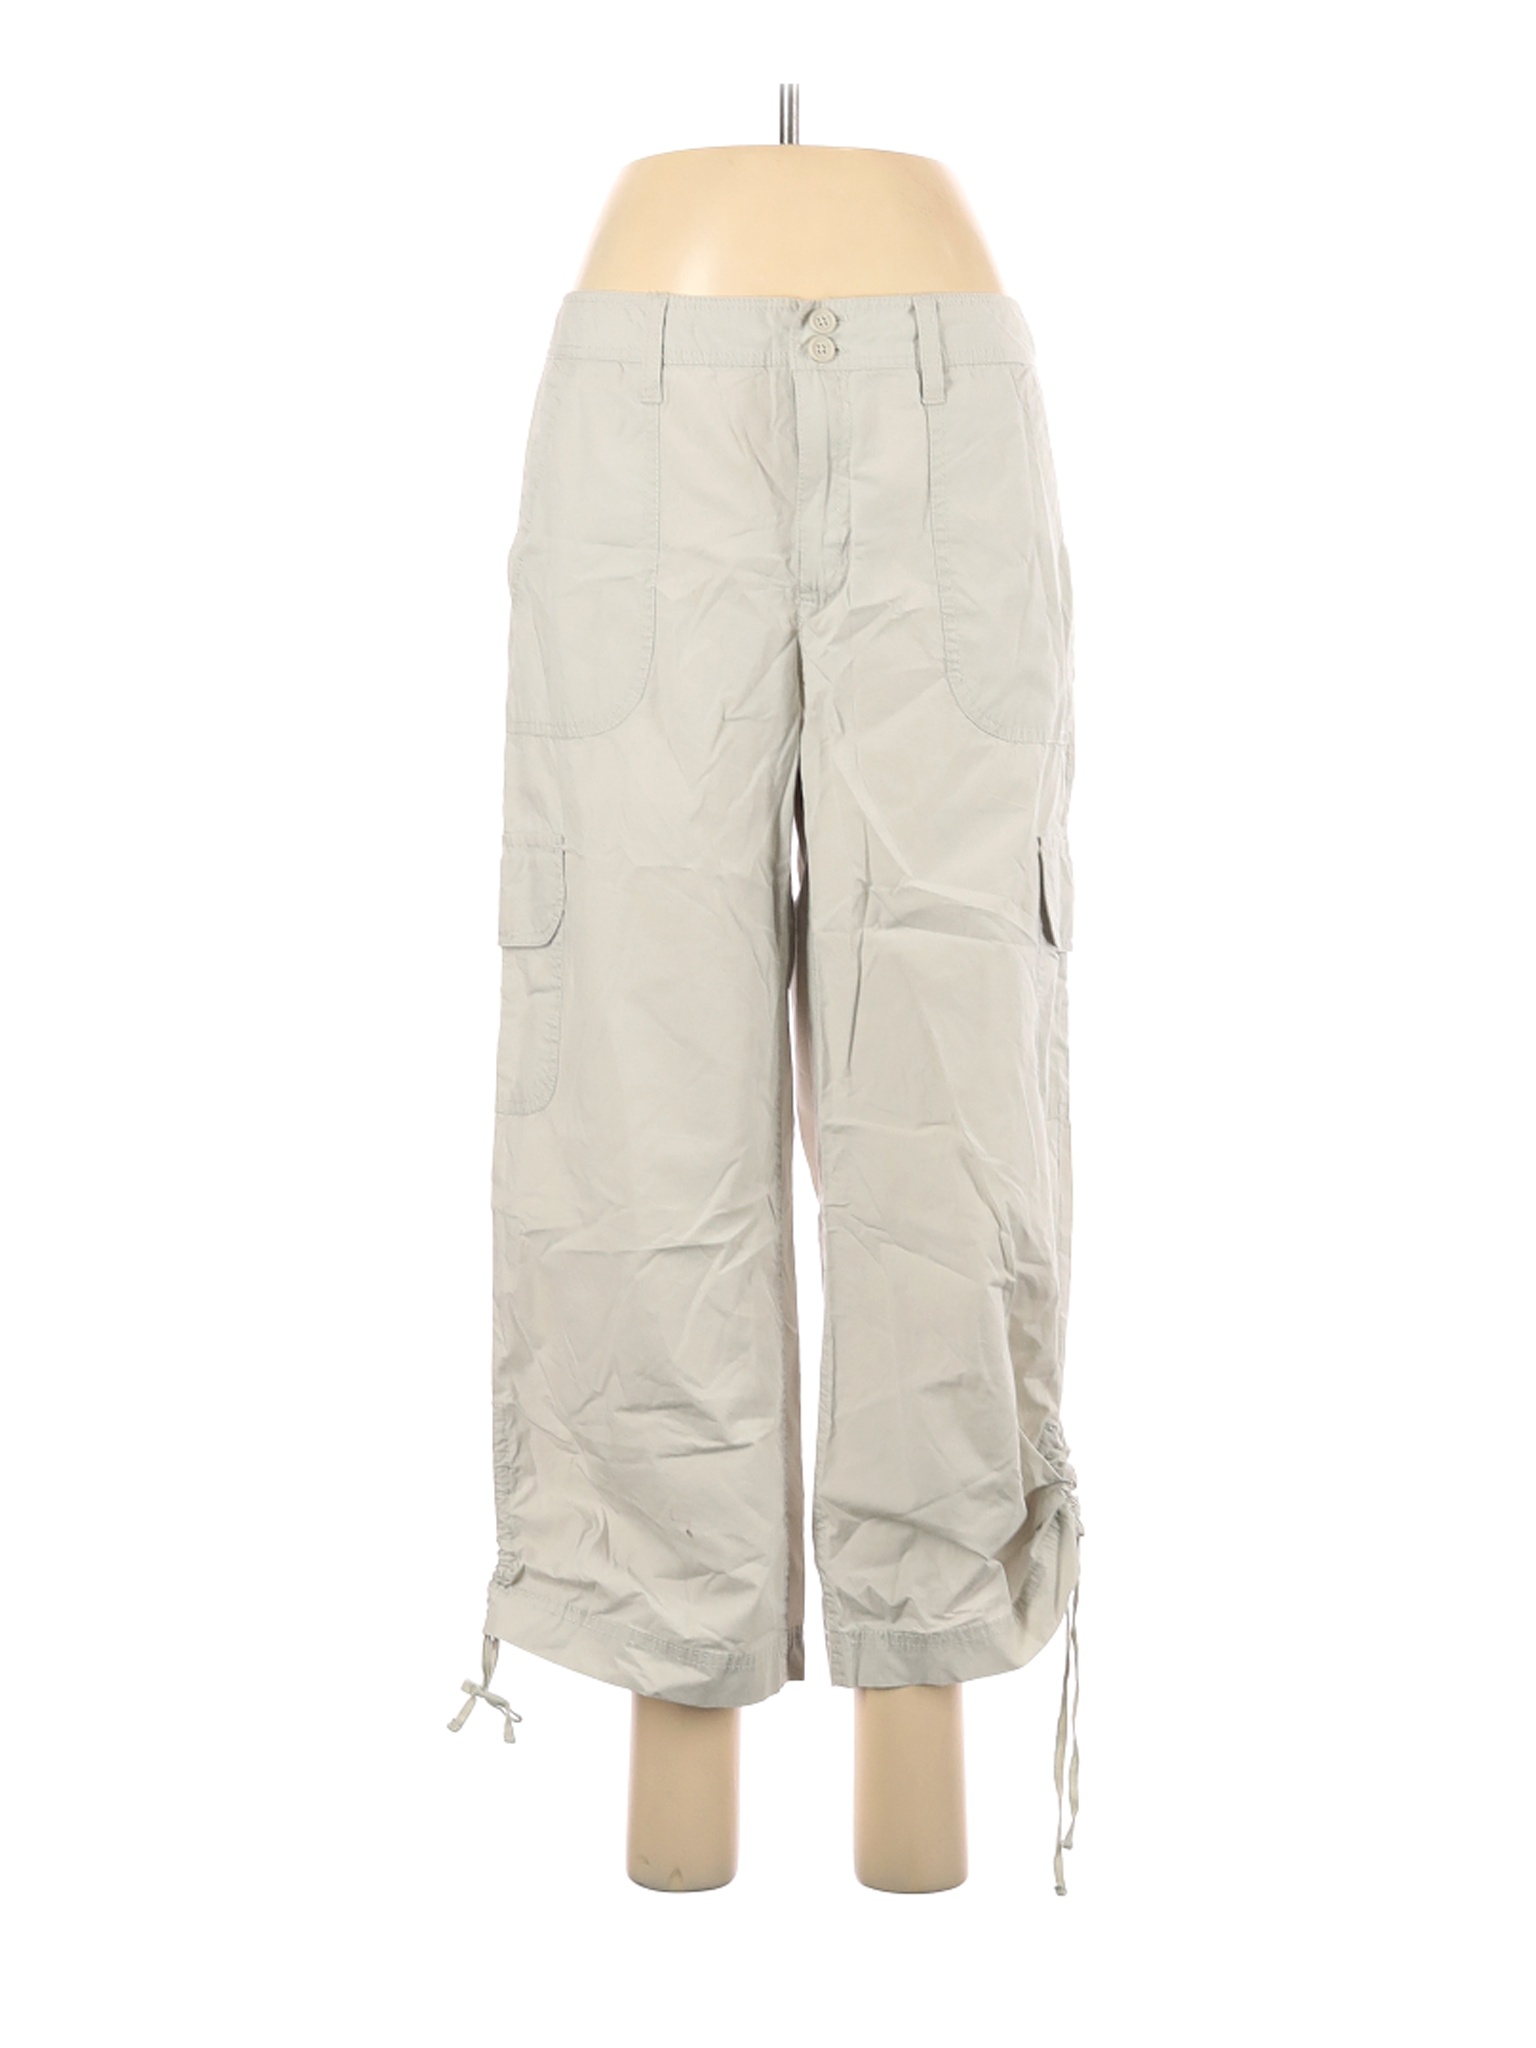 Jamaica Bay Women Ivory Cargo Pants 6 | eBay